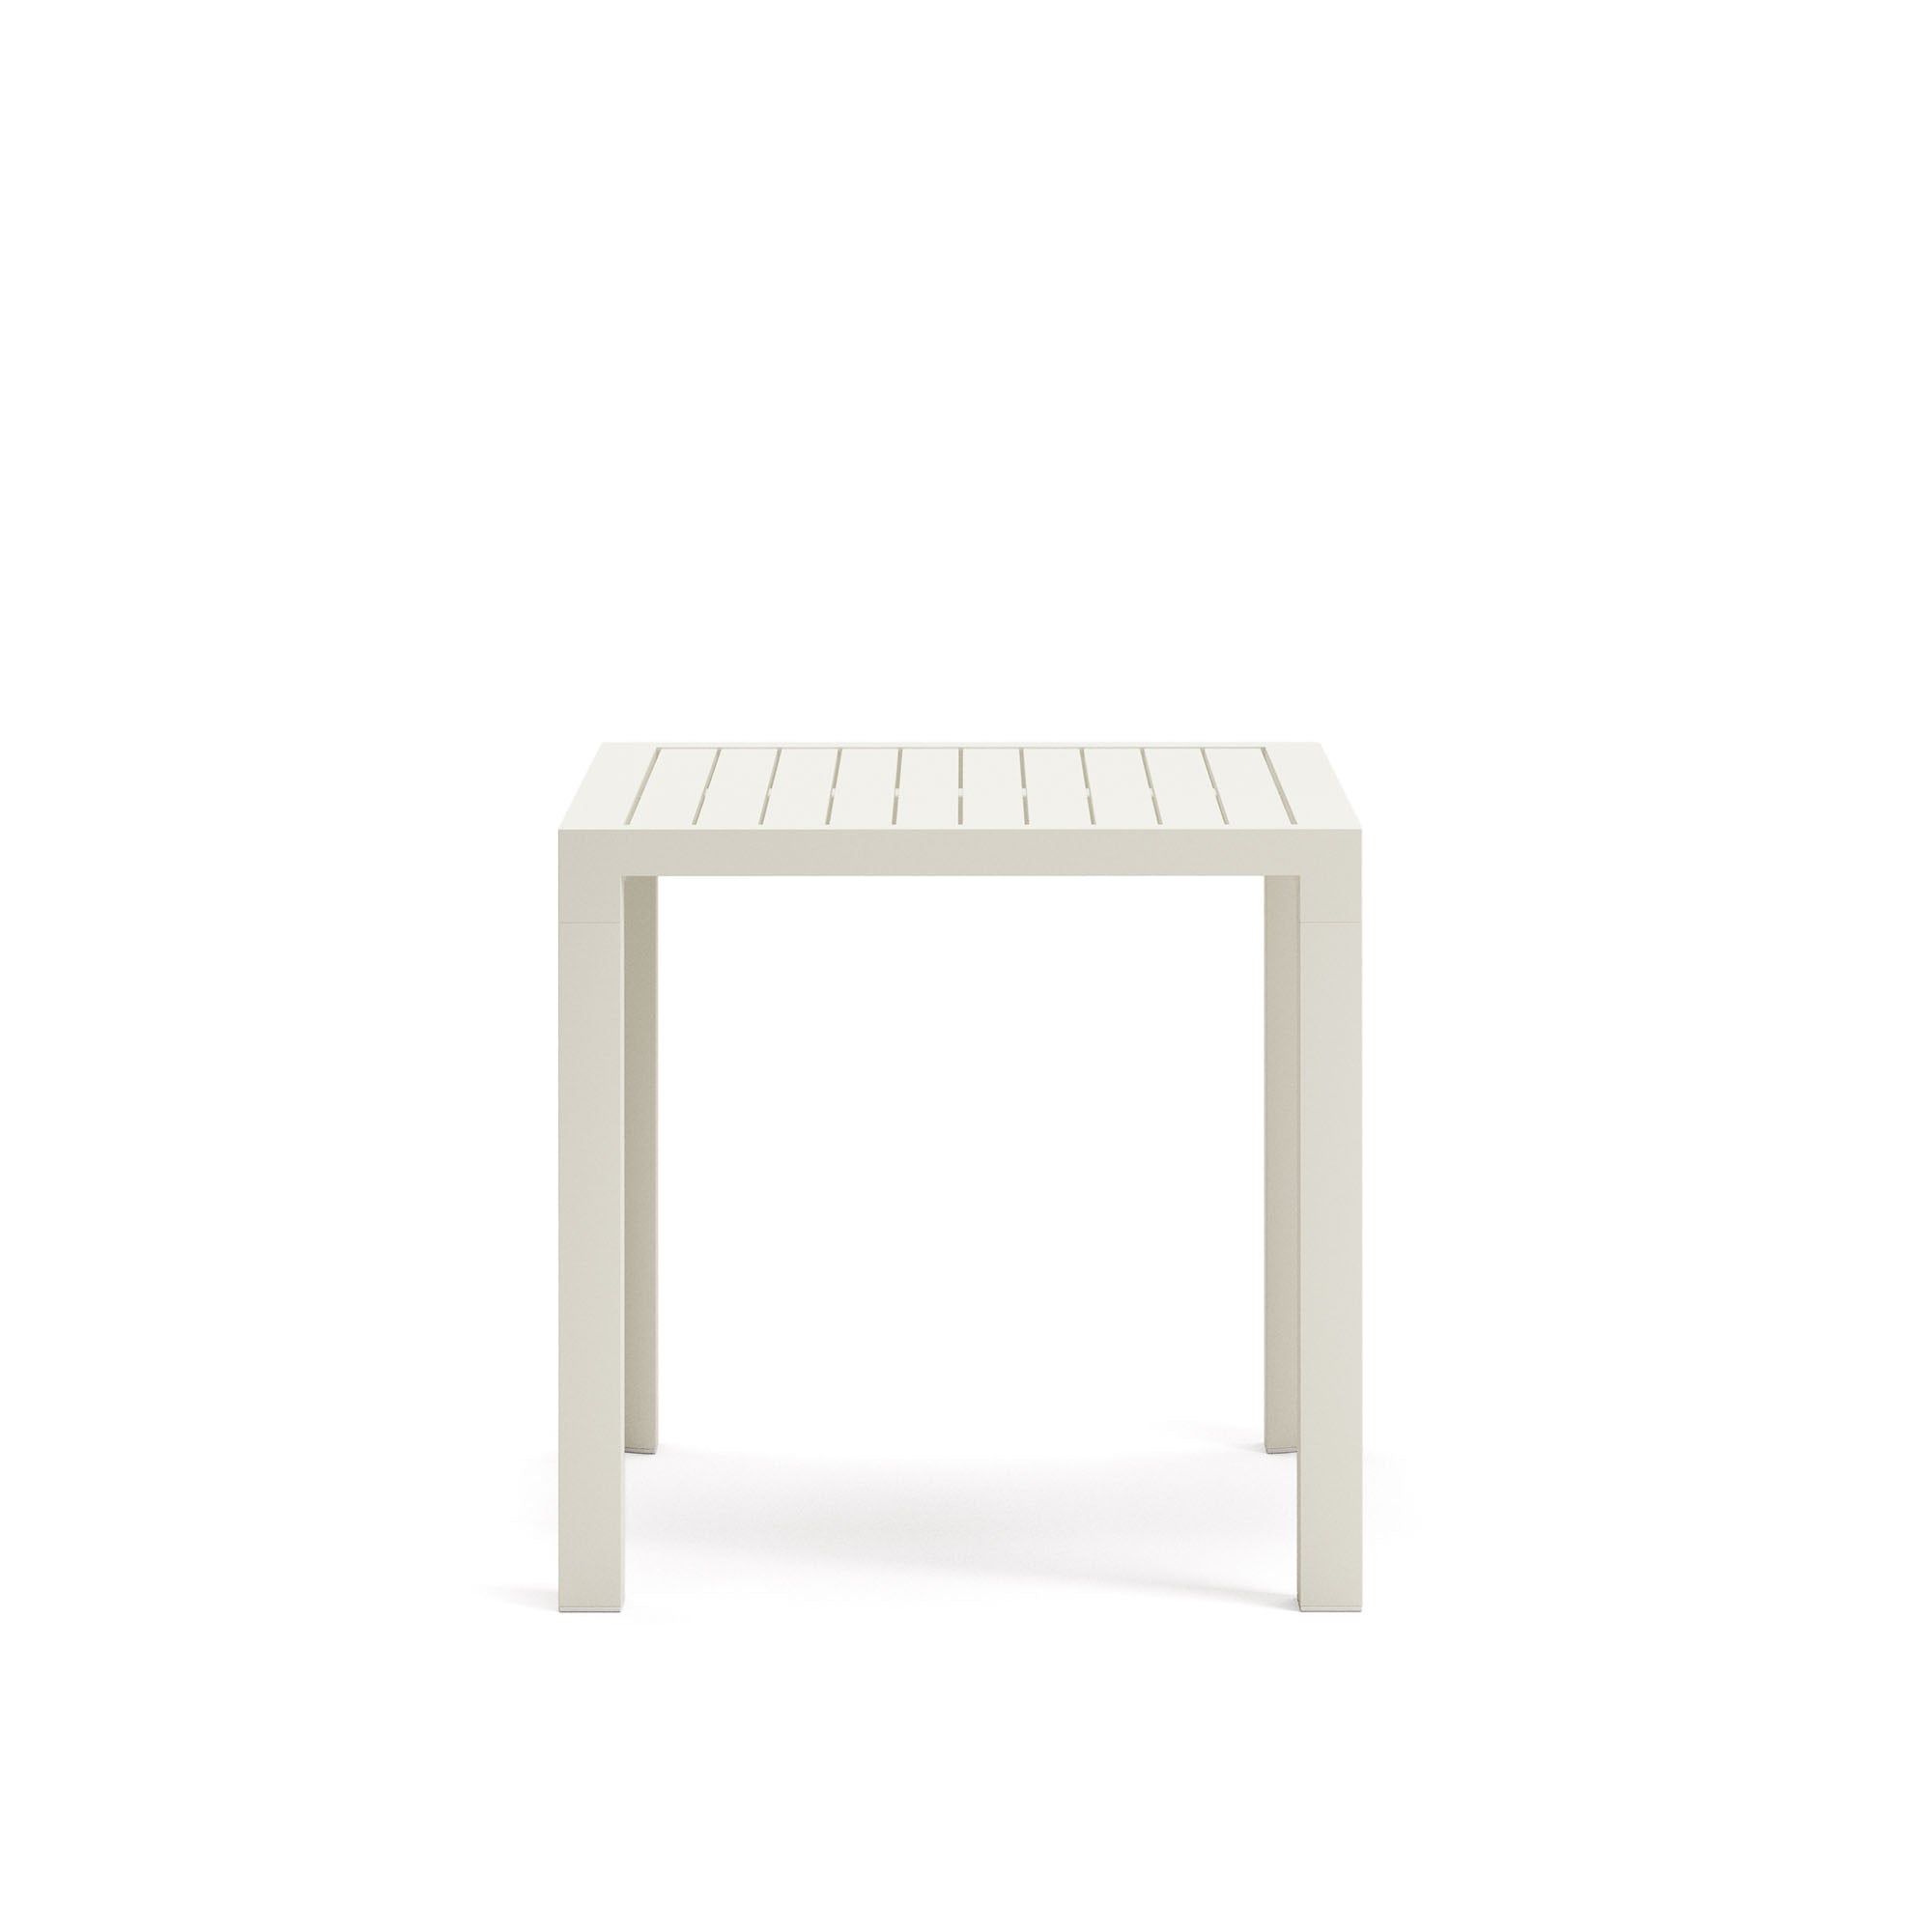 Culip aluminium outdoor table in powder coated white finish, 77 x 77 cm